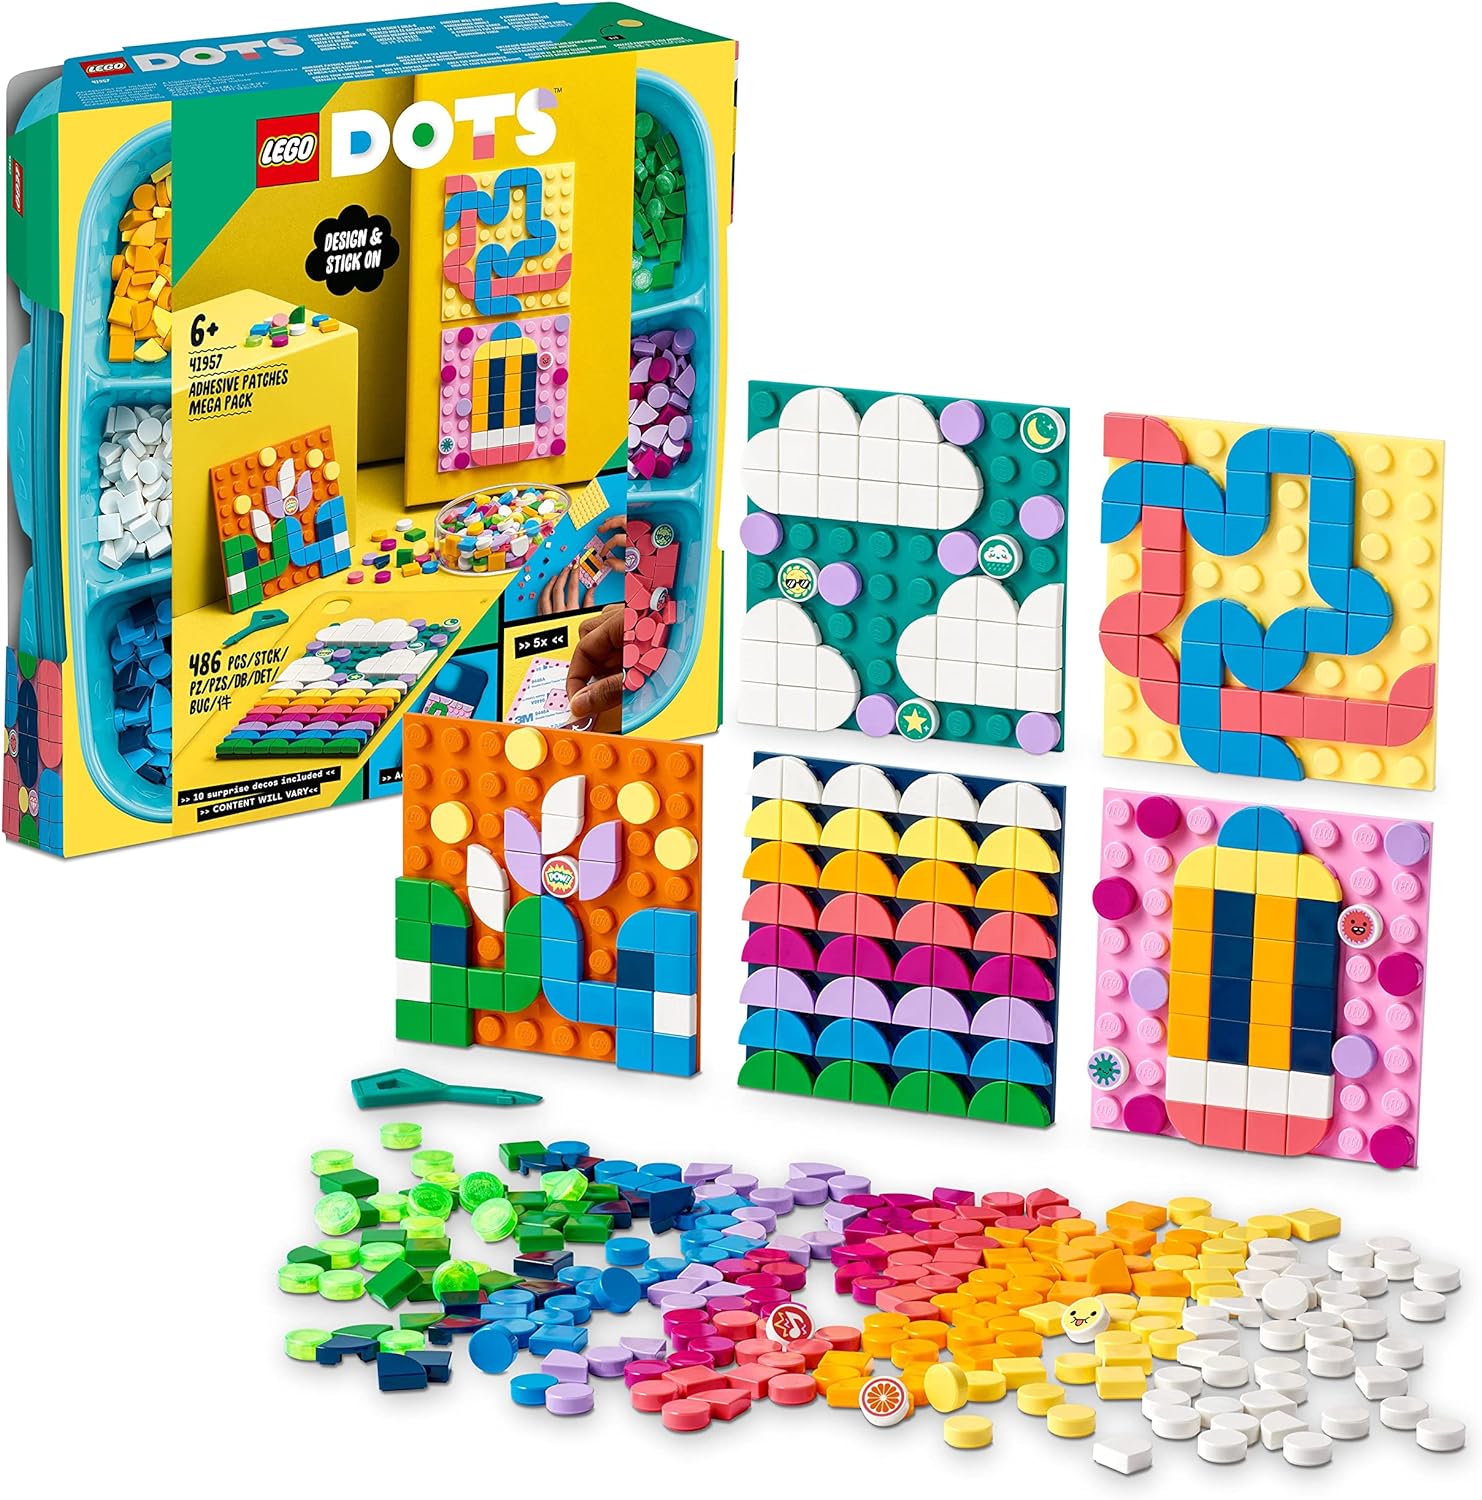 LEGO 41957 DOTS Kreativ Aufkleber Set 5in1 DIY Bastelset Spielzeug zum Basteln Mosaik Legobausteine Legosets Legosteine Bausteine Sets Steine